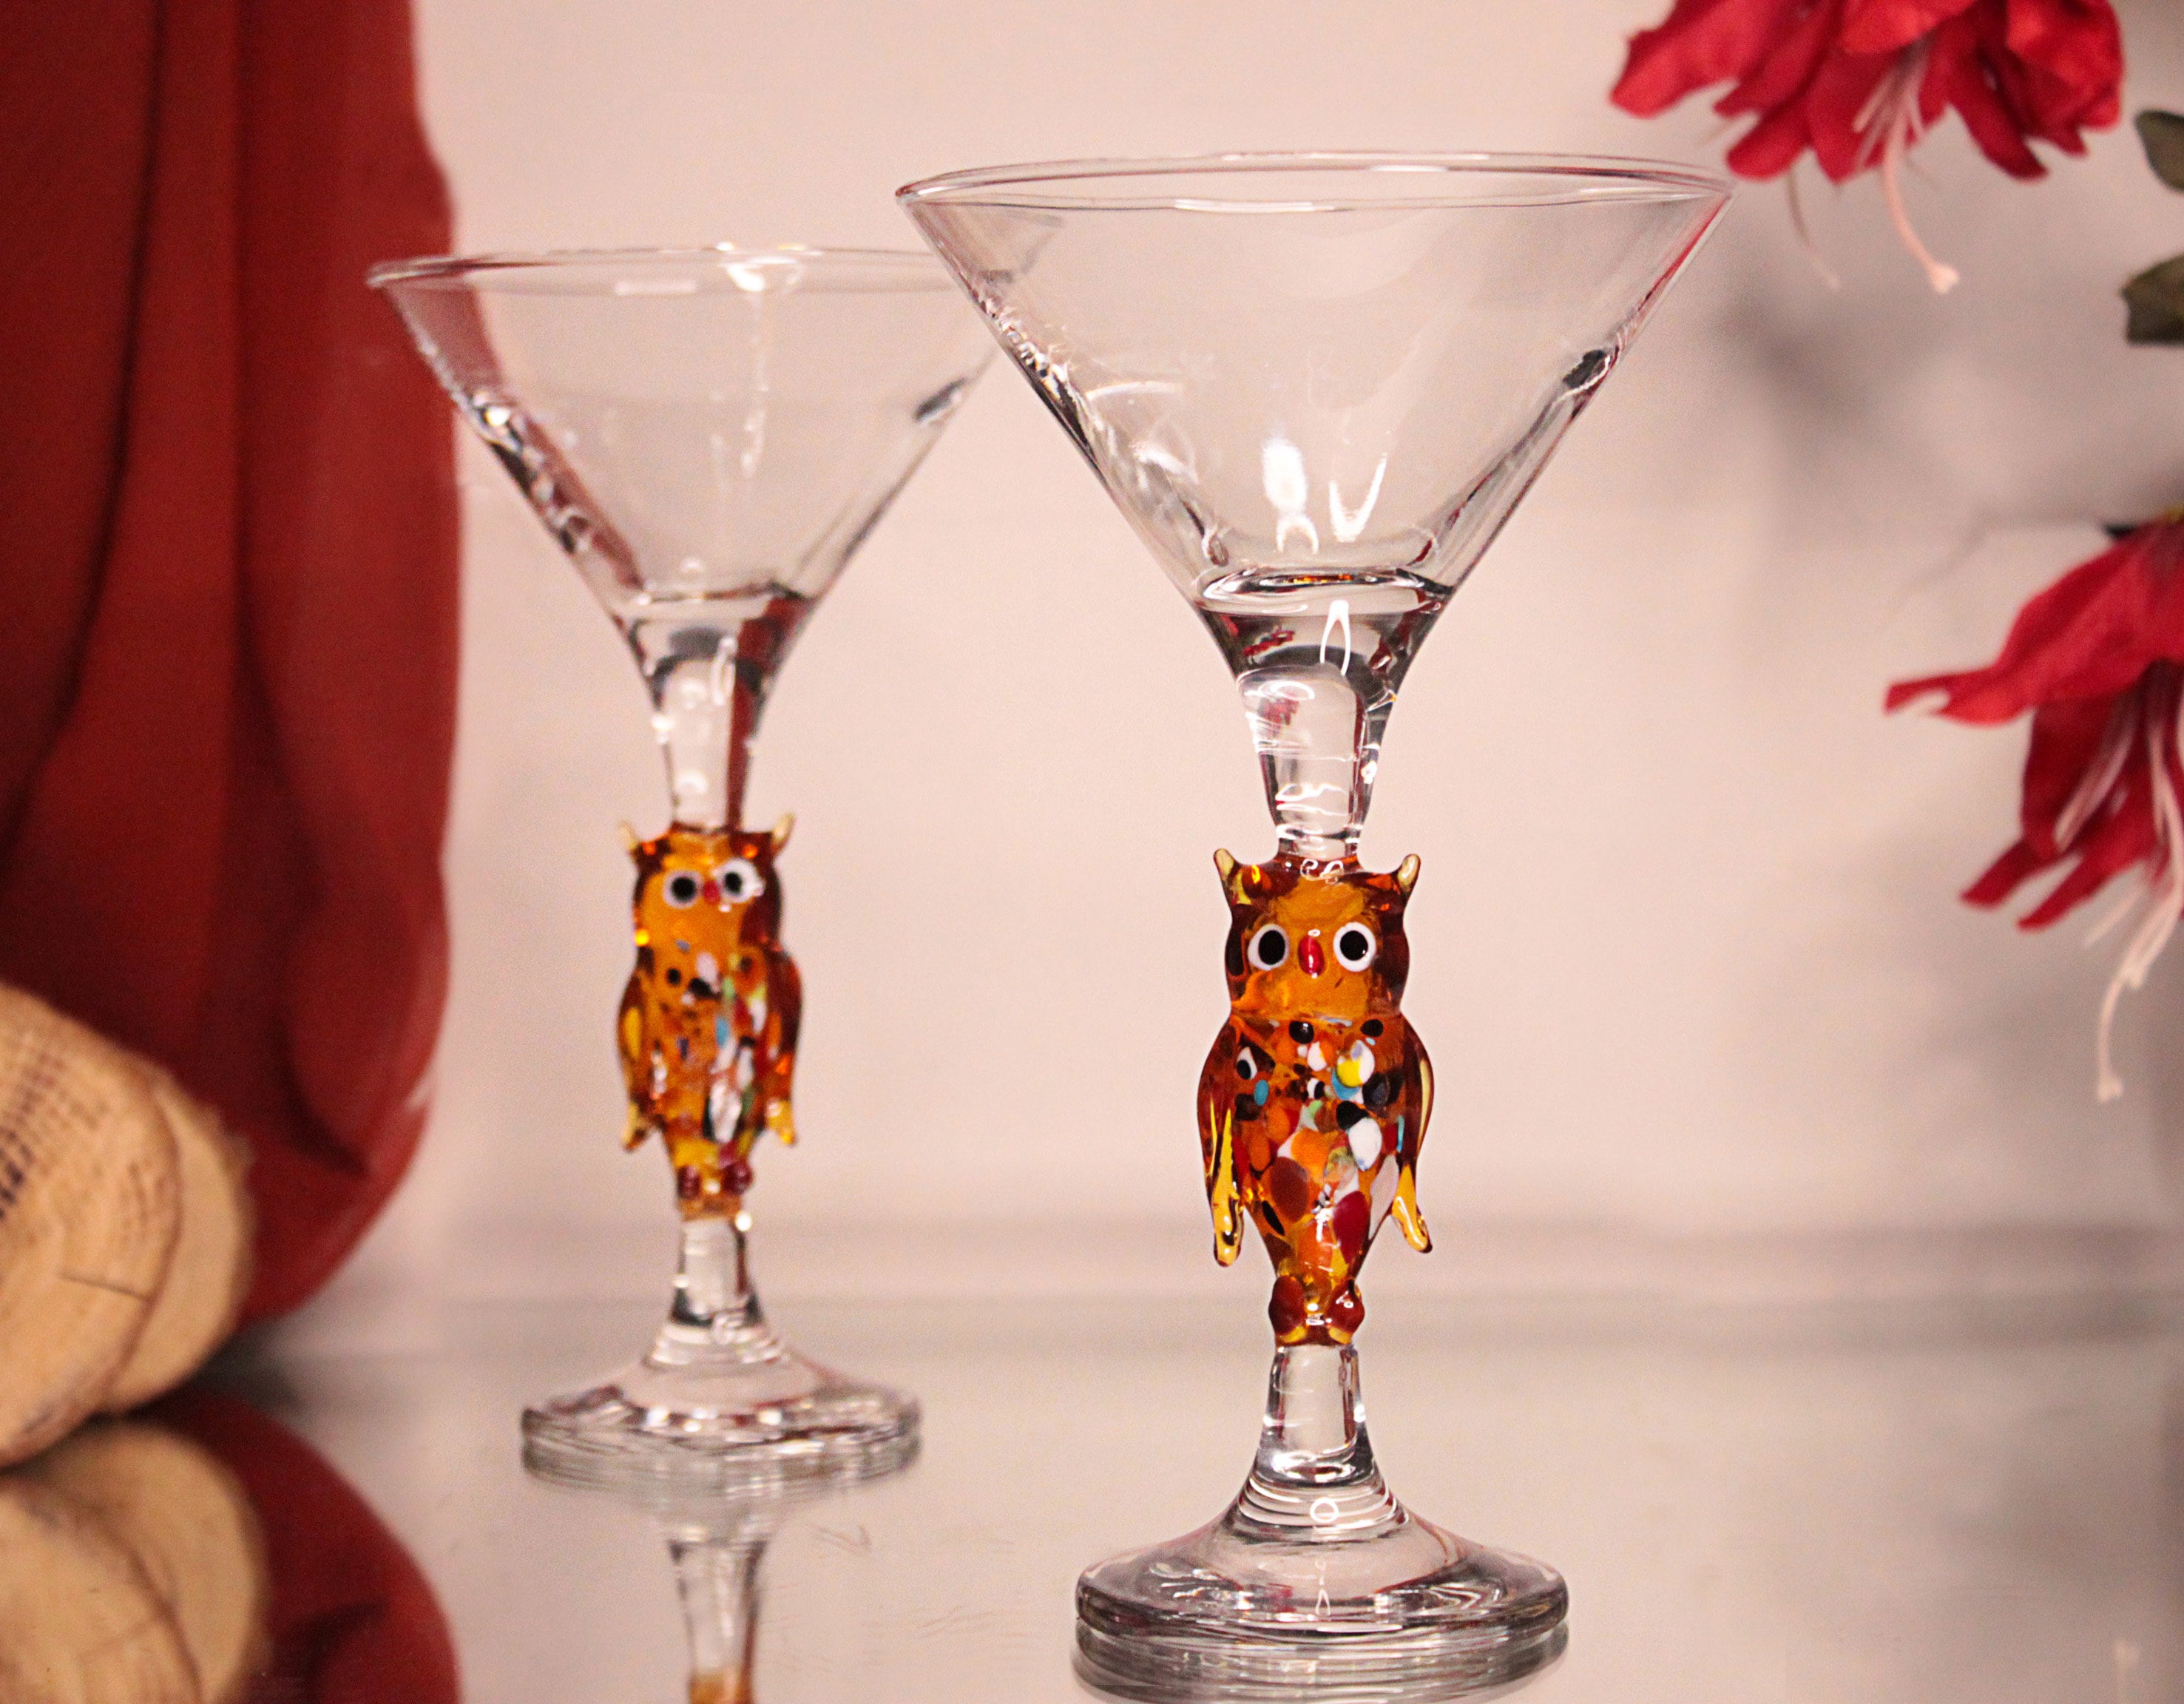 LipLidz ~ 10 oz. Martini Glass w/Attachable Drink-thru Lid (4 Pack)